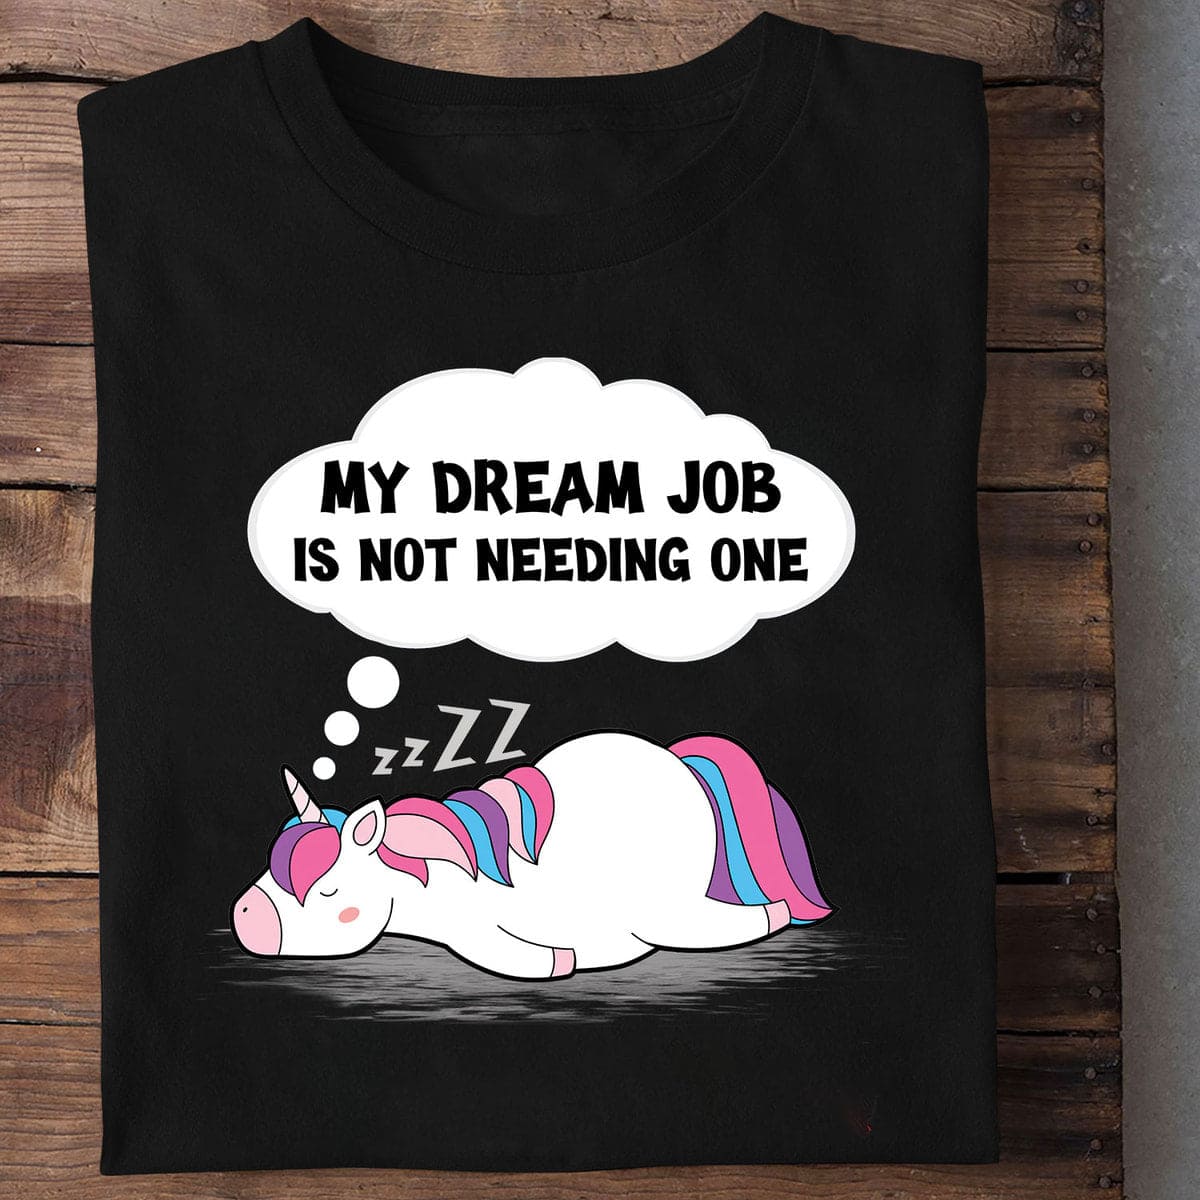 My dream job is not needing one - Sleepin unicorn, gift for lazy people